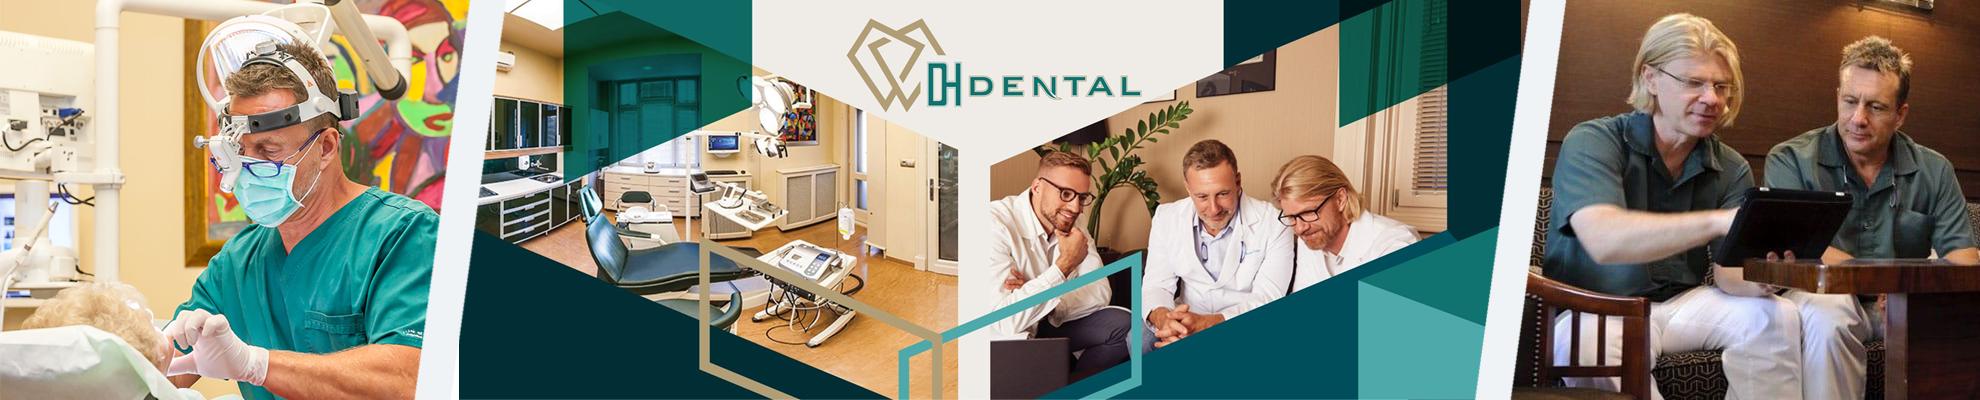 DH Dental - Dr Decker & Dr Huszar - banner